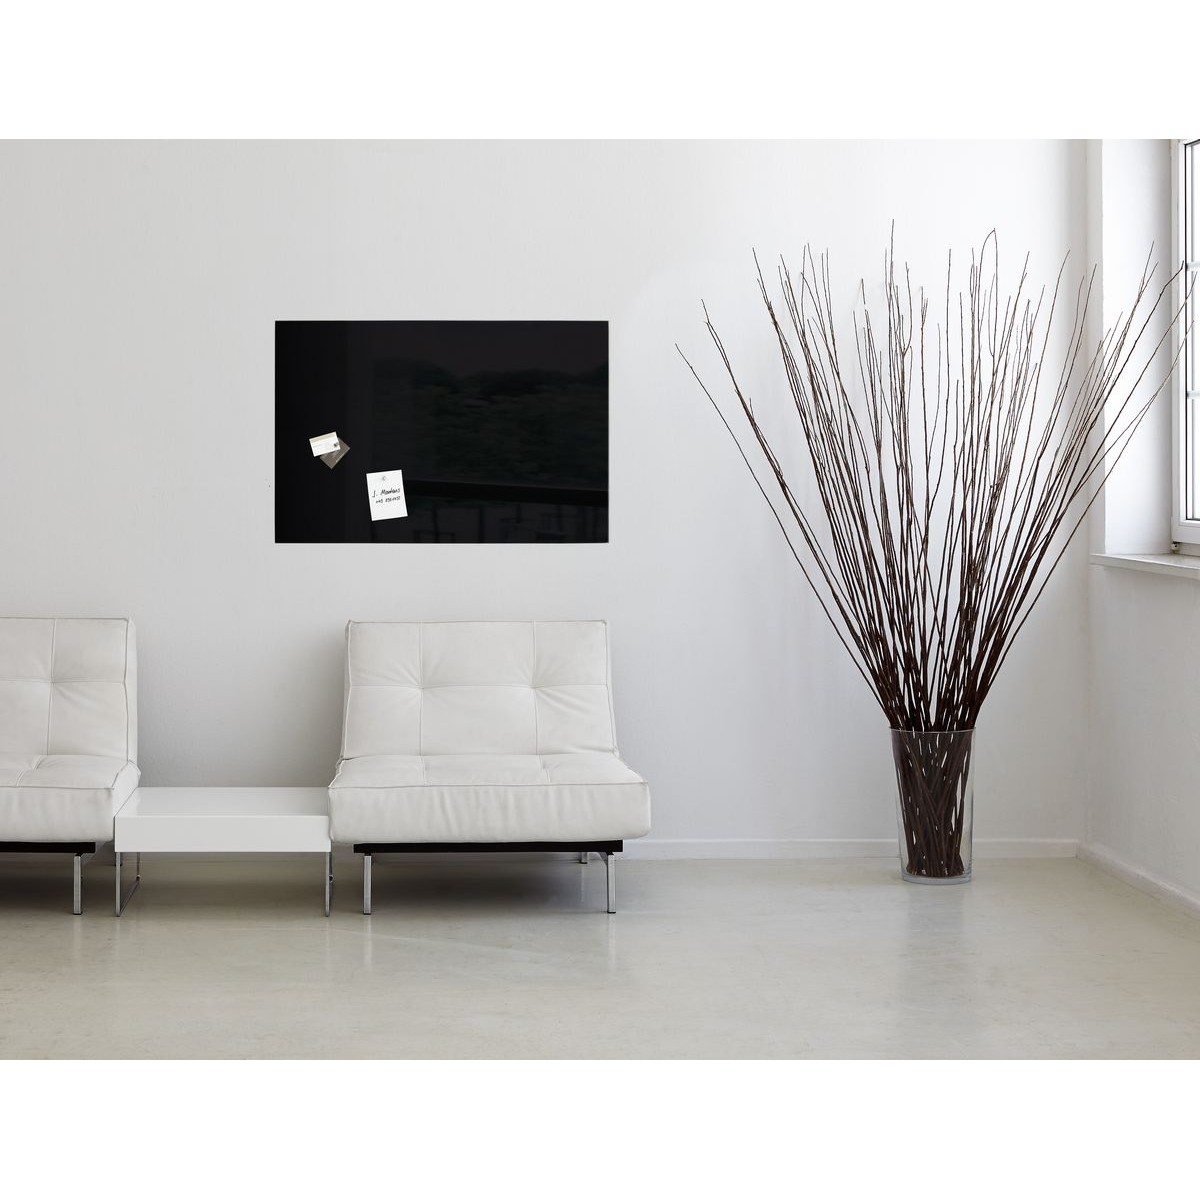 GL140 - Sigel - Magnetic Glass Board - Black - 100 x 65 cm 